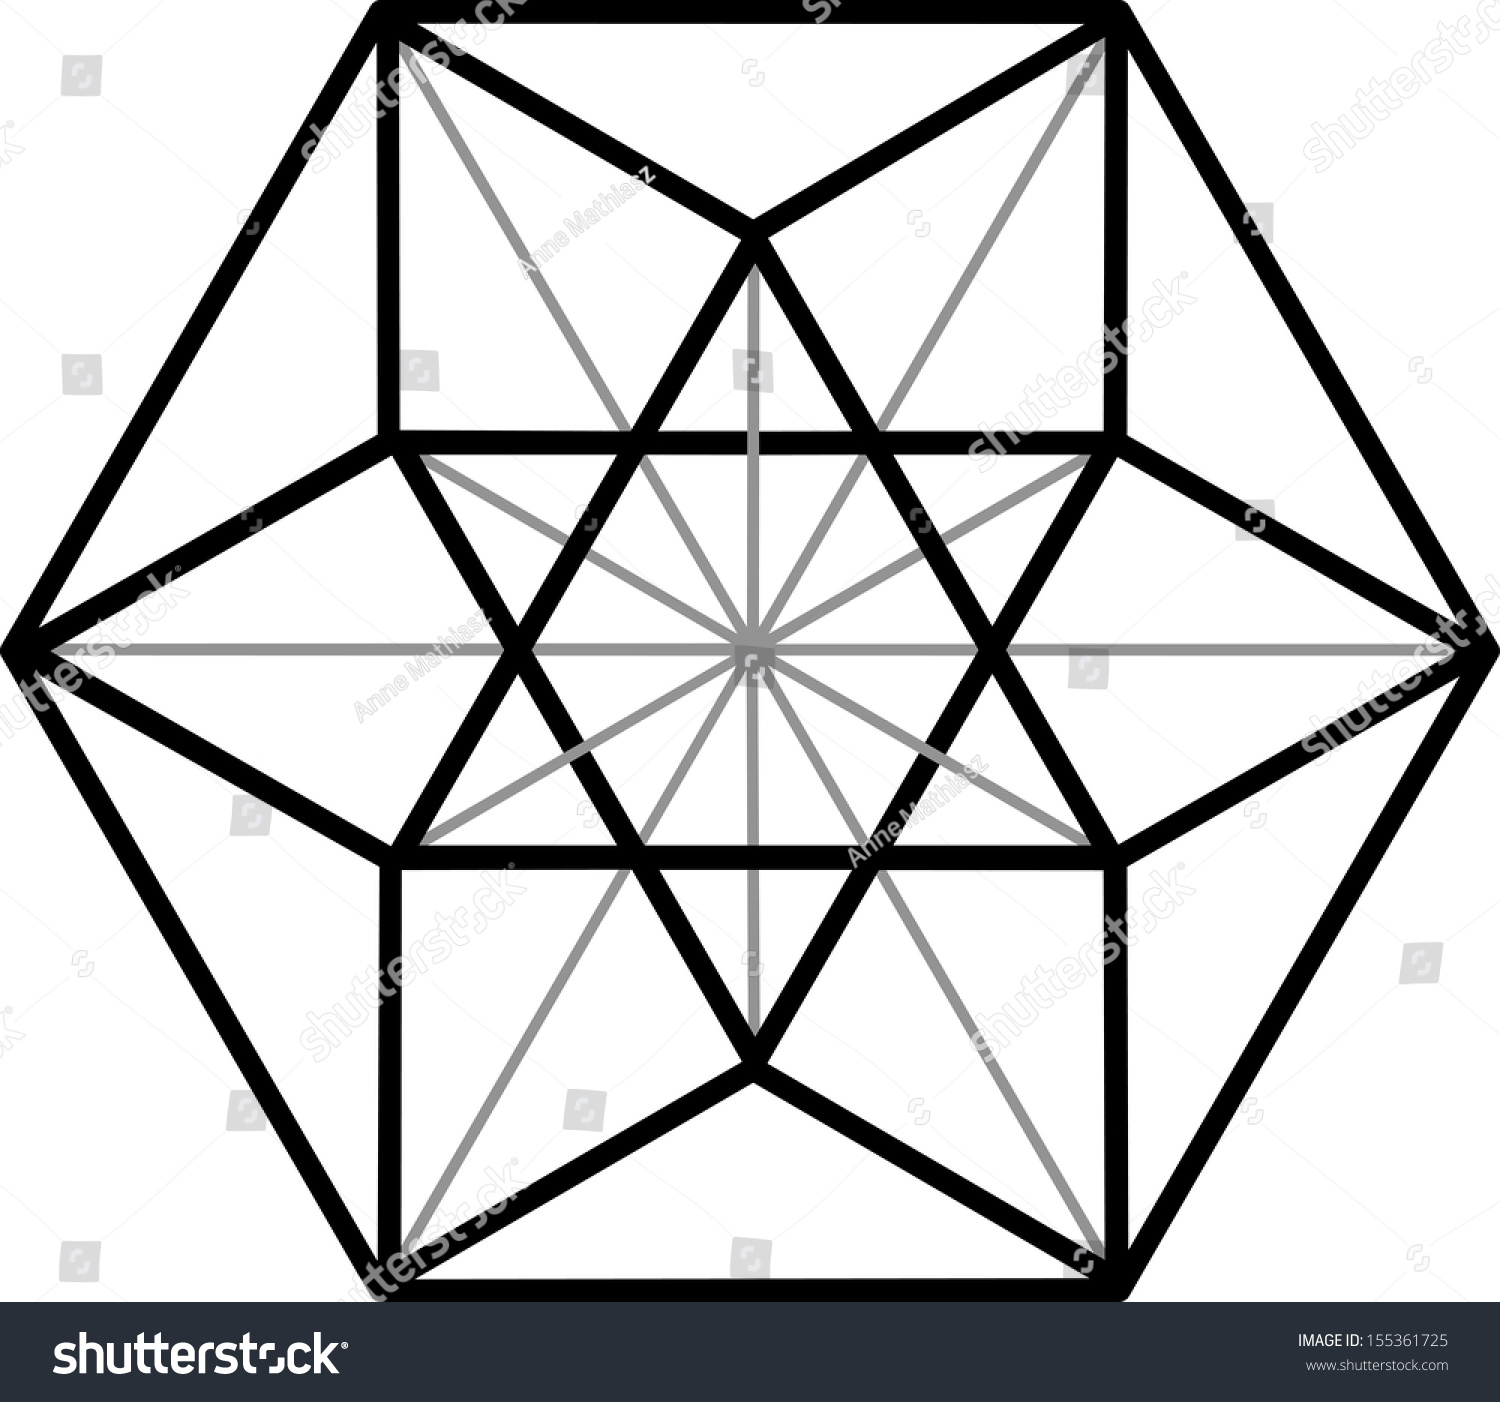 stock-vector-cuboctahedron-vector-equilibrium-archimedean-solid-155361725.jpg